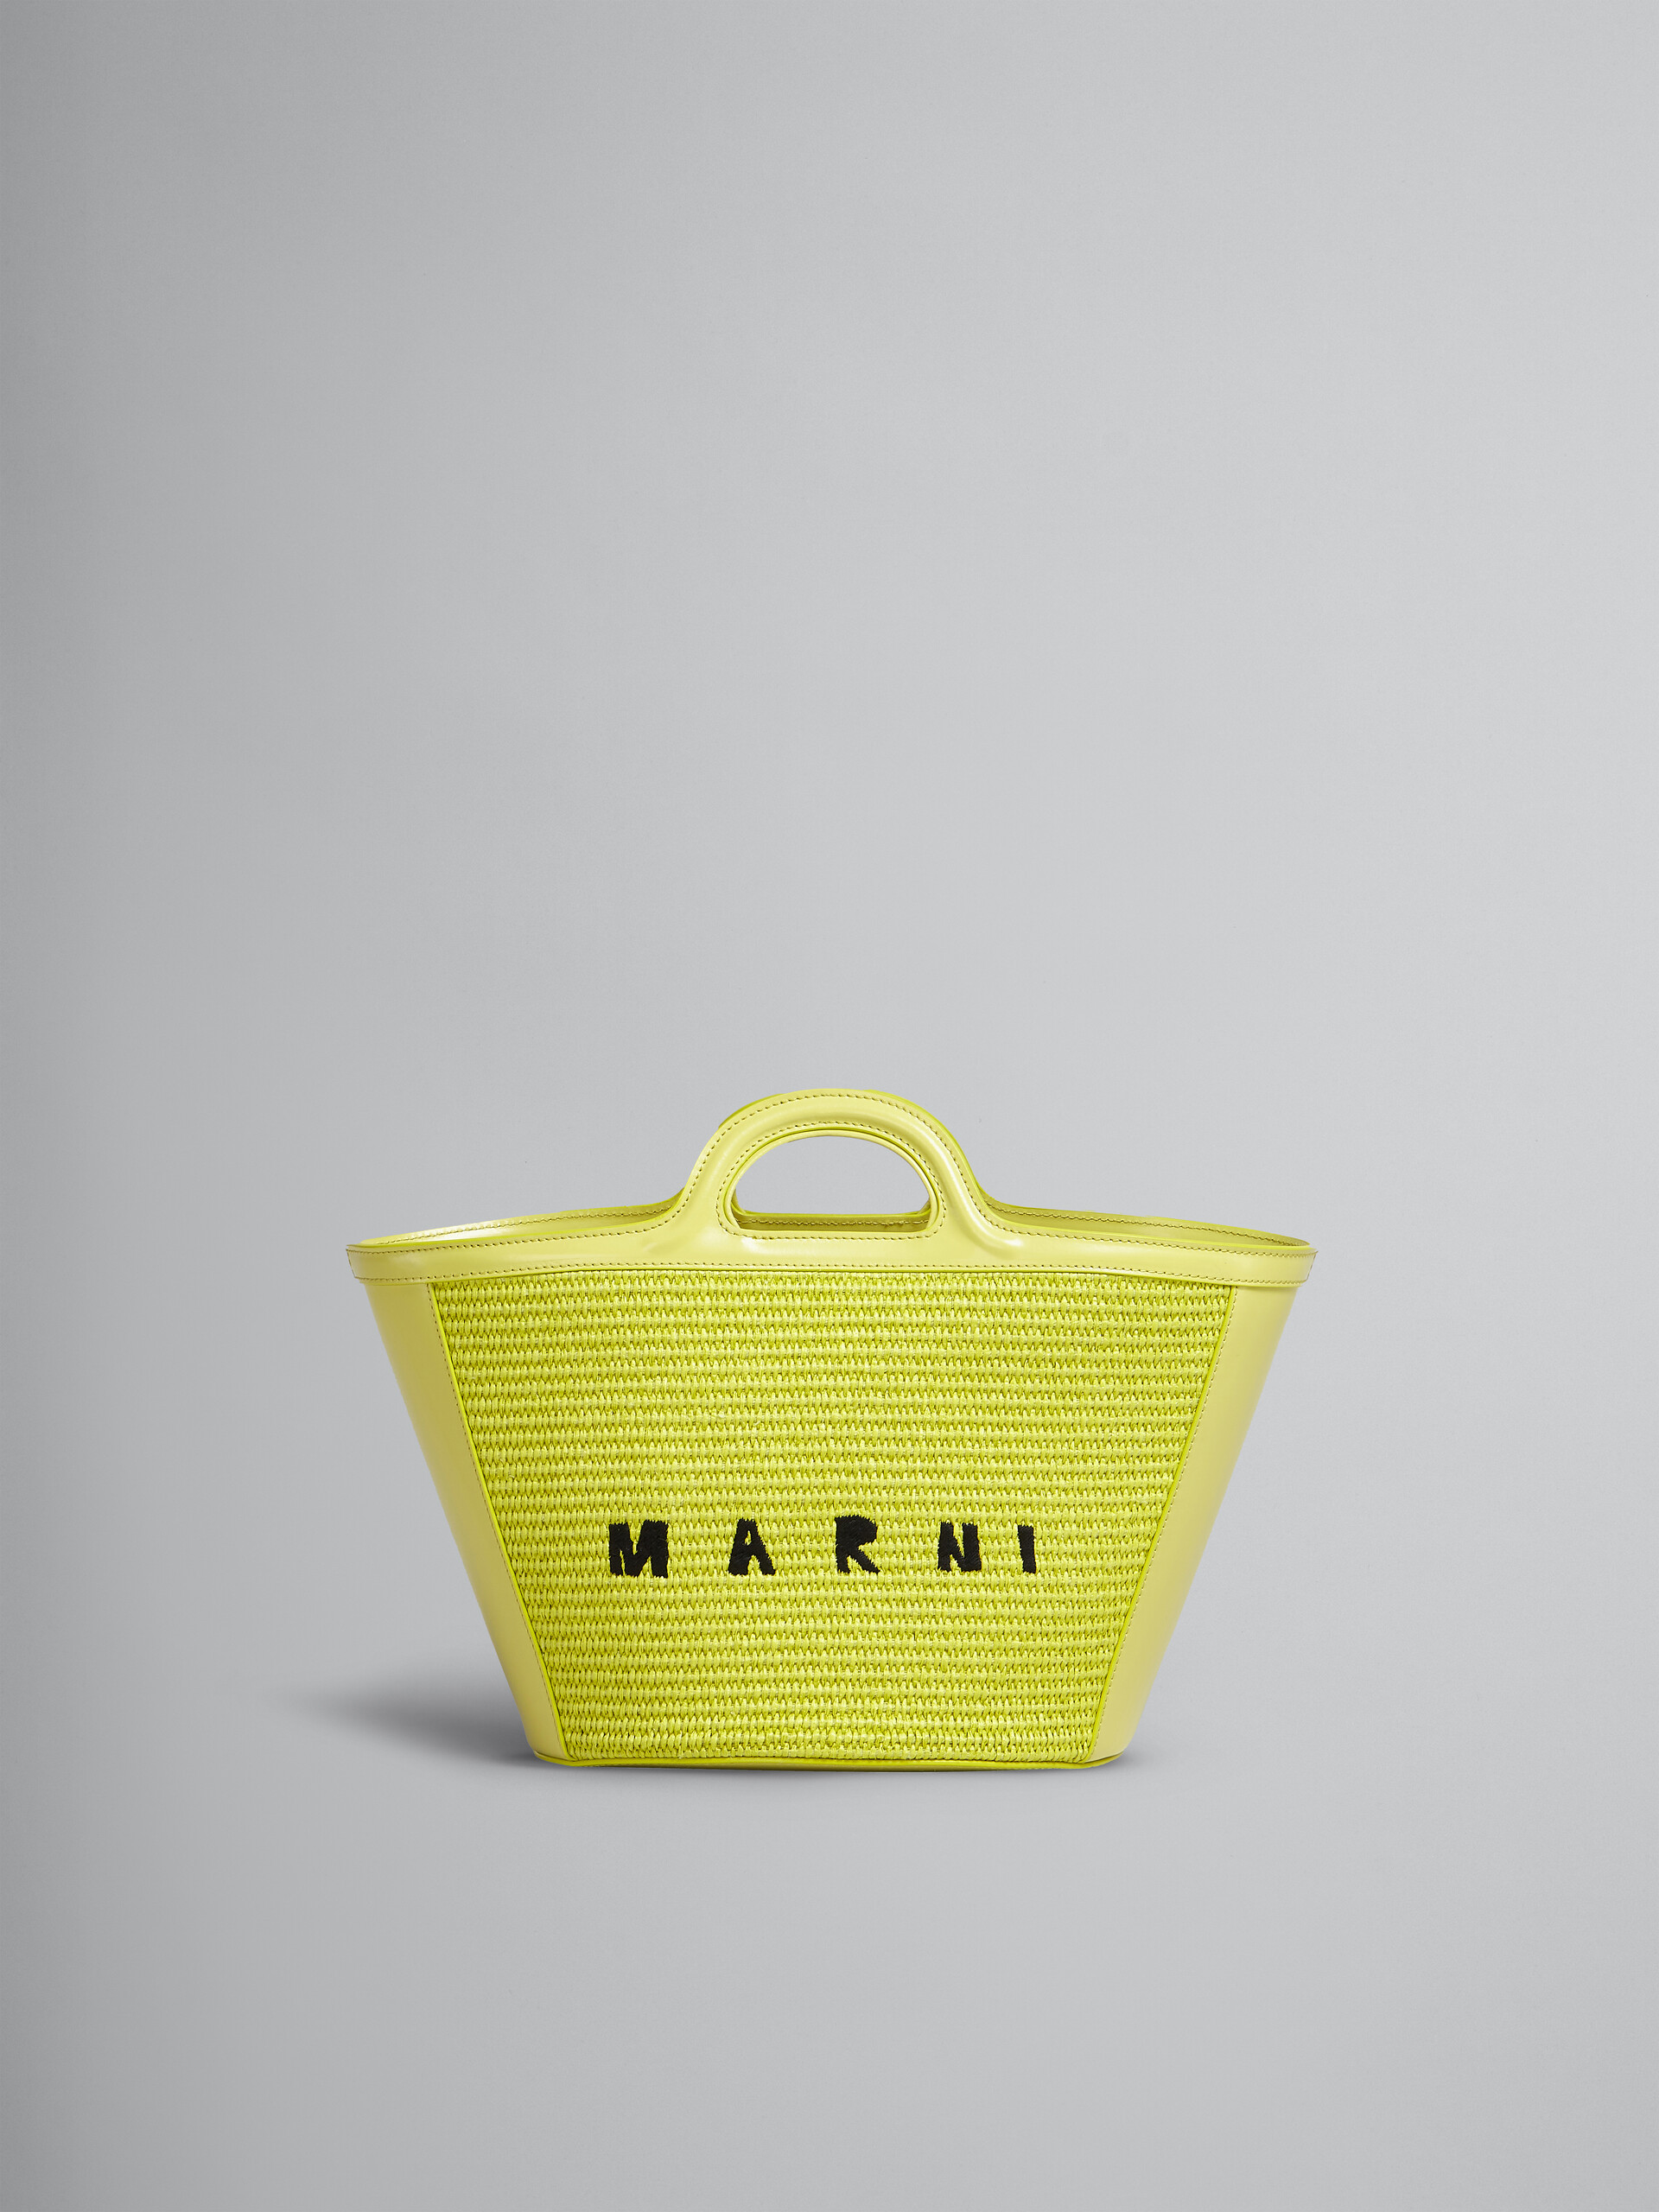 TROPICALIA small bag in yellow leather and raffia - Handbag - Image 1